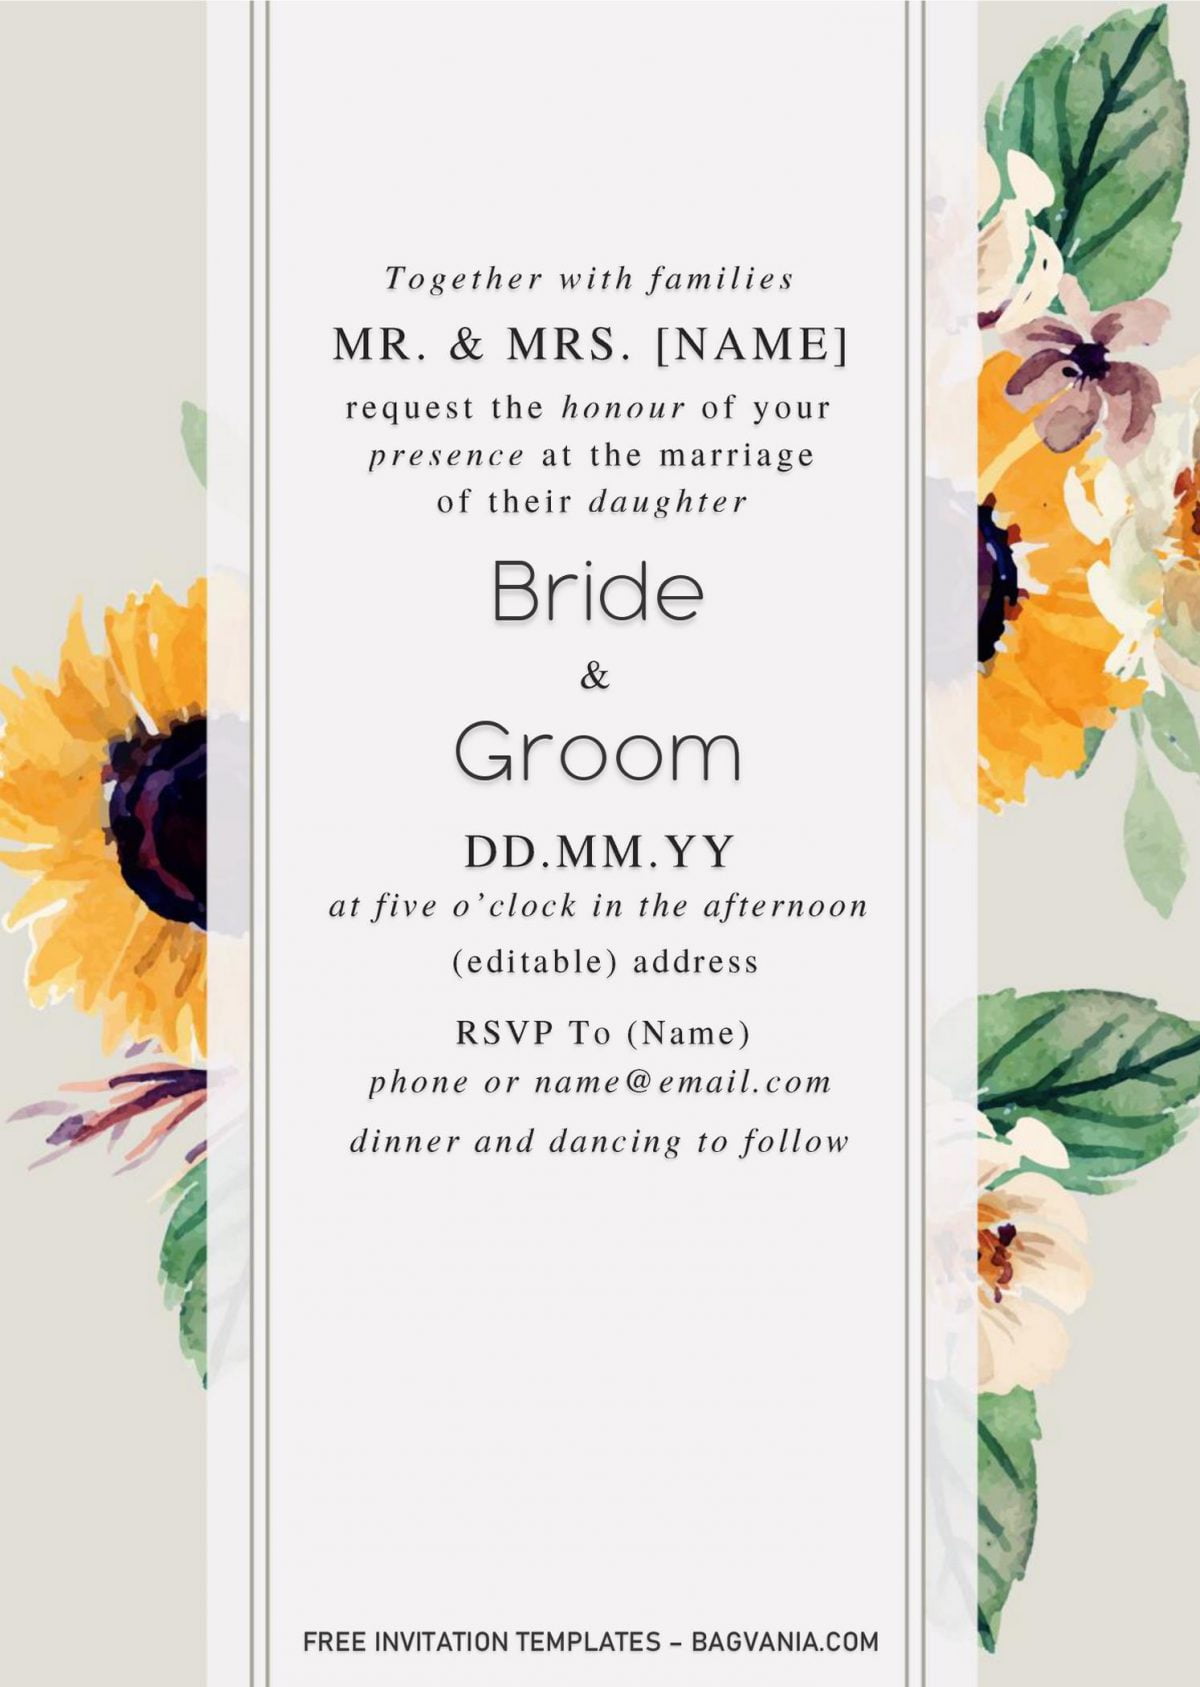 Sunflower Wedding Invitation Templates - Editable With Microsoft Word and has minimalist design